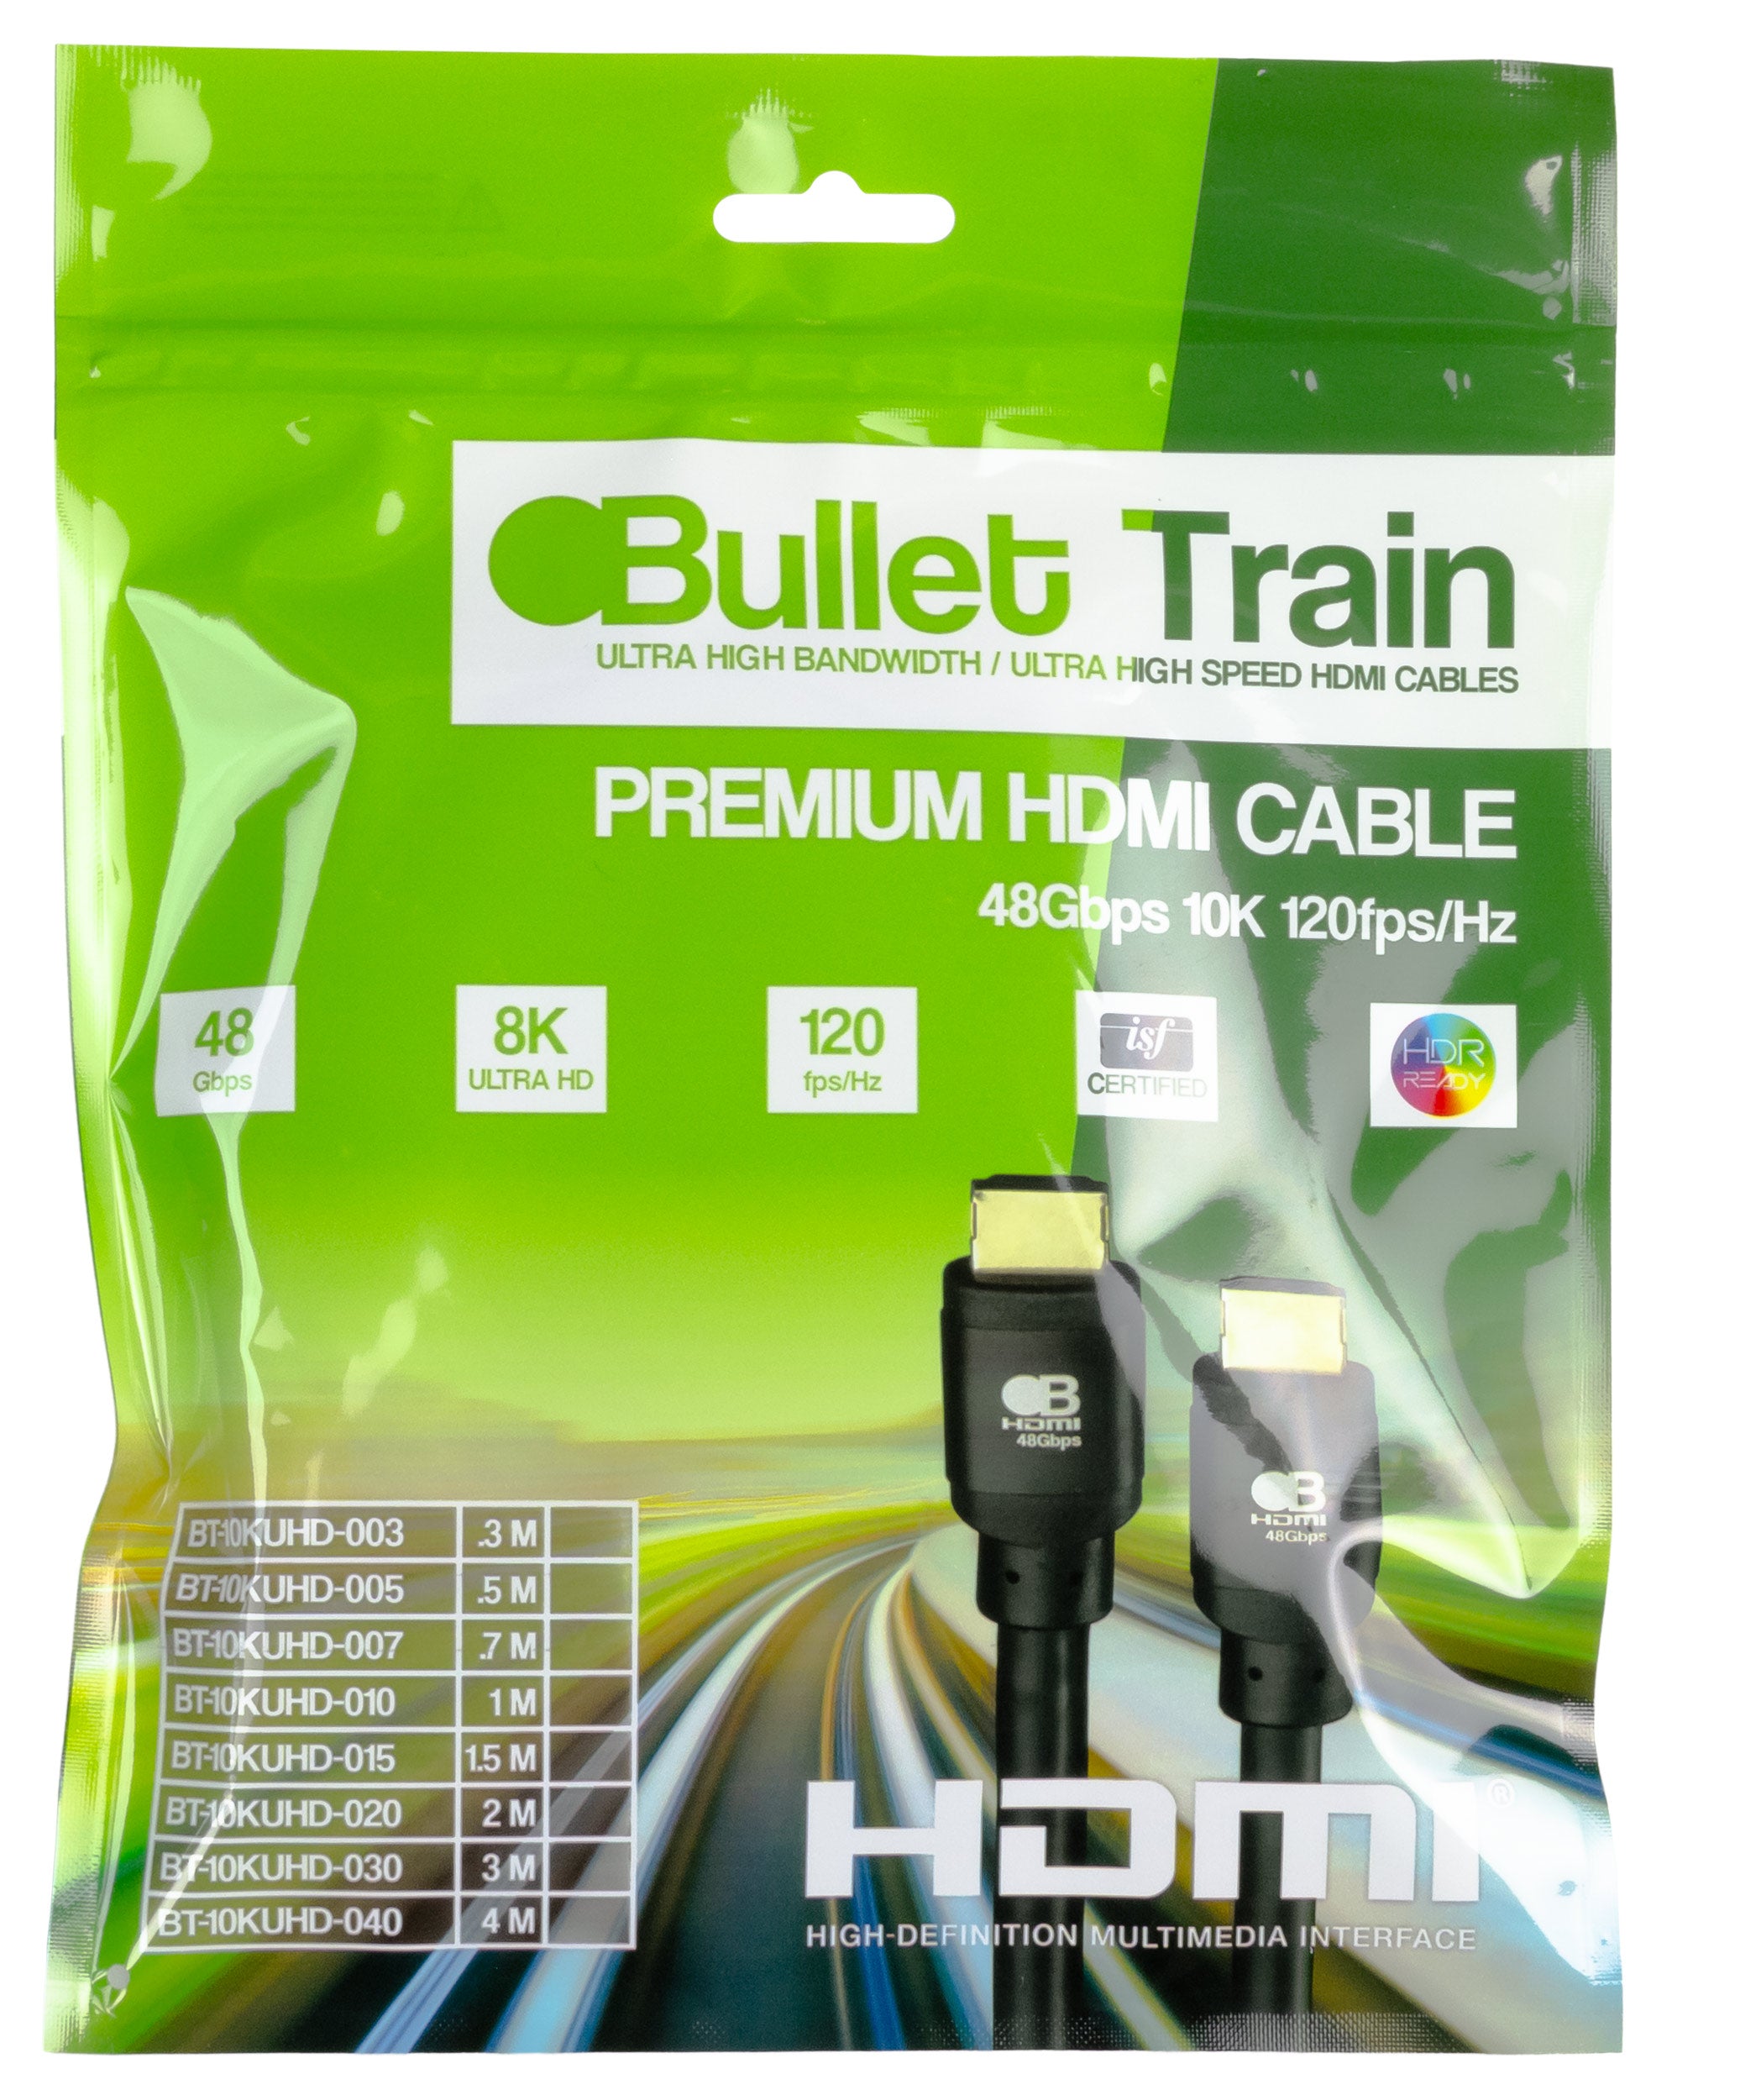 AVPro Edge BT-10KUHD-040 Bullet Train 4M Meter 10K 48Gbps HDMI Cable